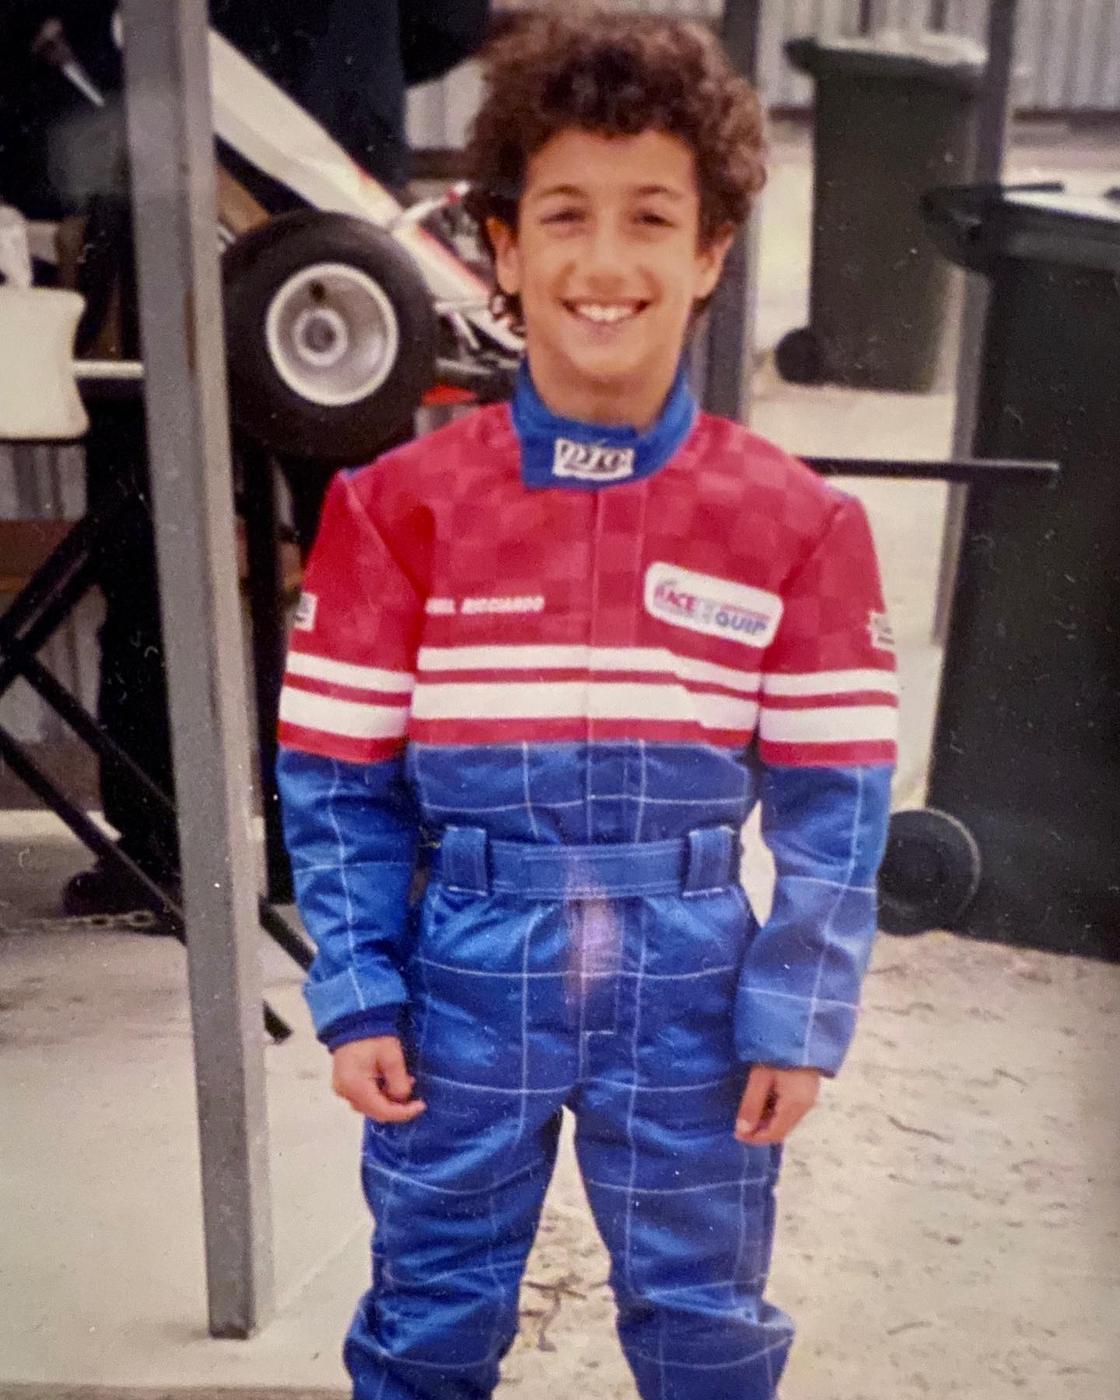 Daniel Ricciardo's photos